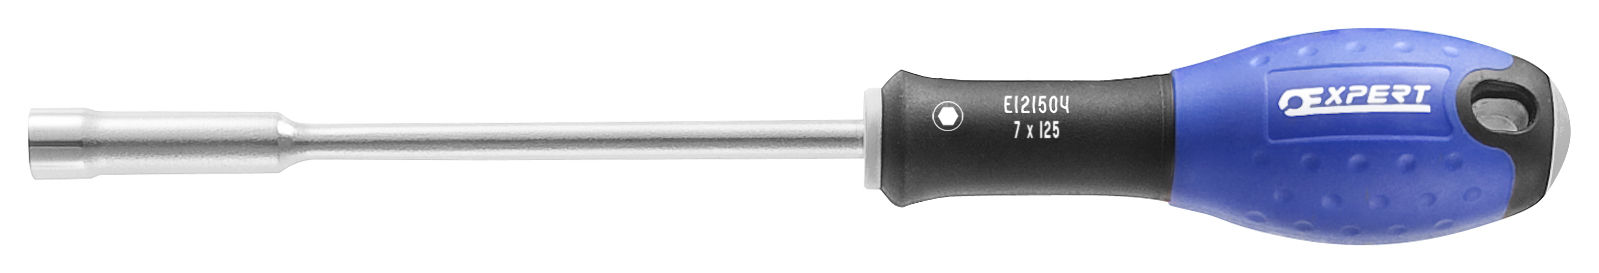 1.E121505 Dopsleutel met handvat - metrisch - 8 mm